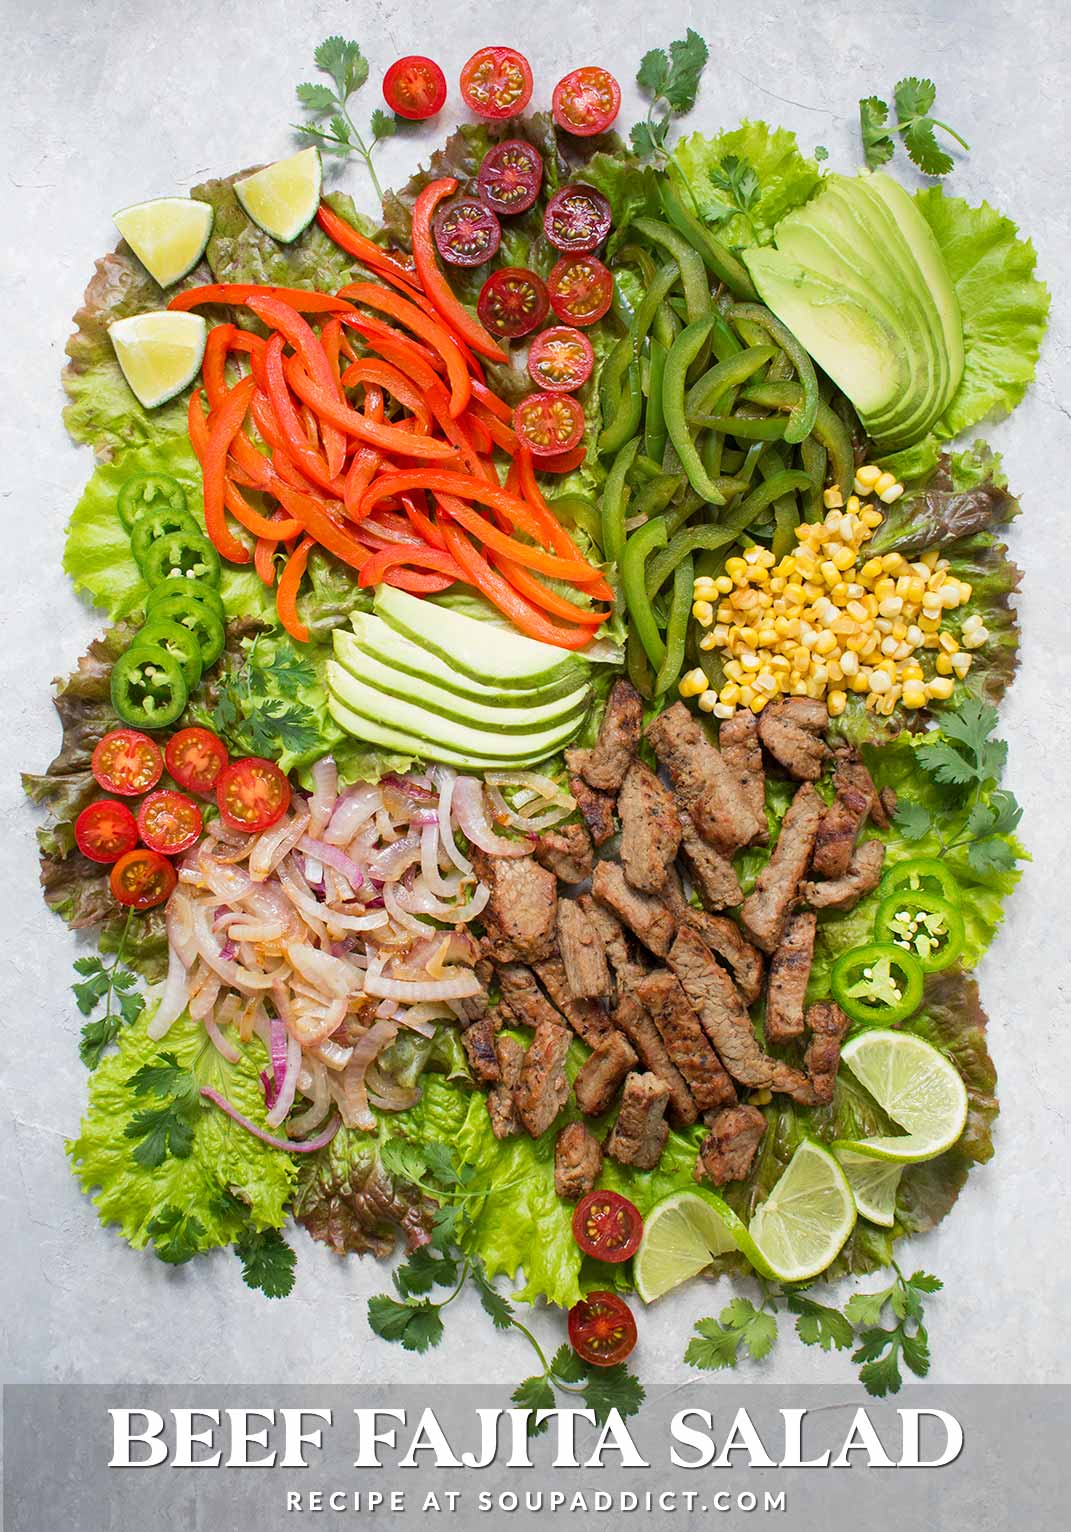 Ingredients of beef fajita salad spread out on board